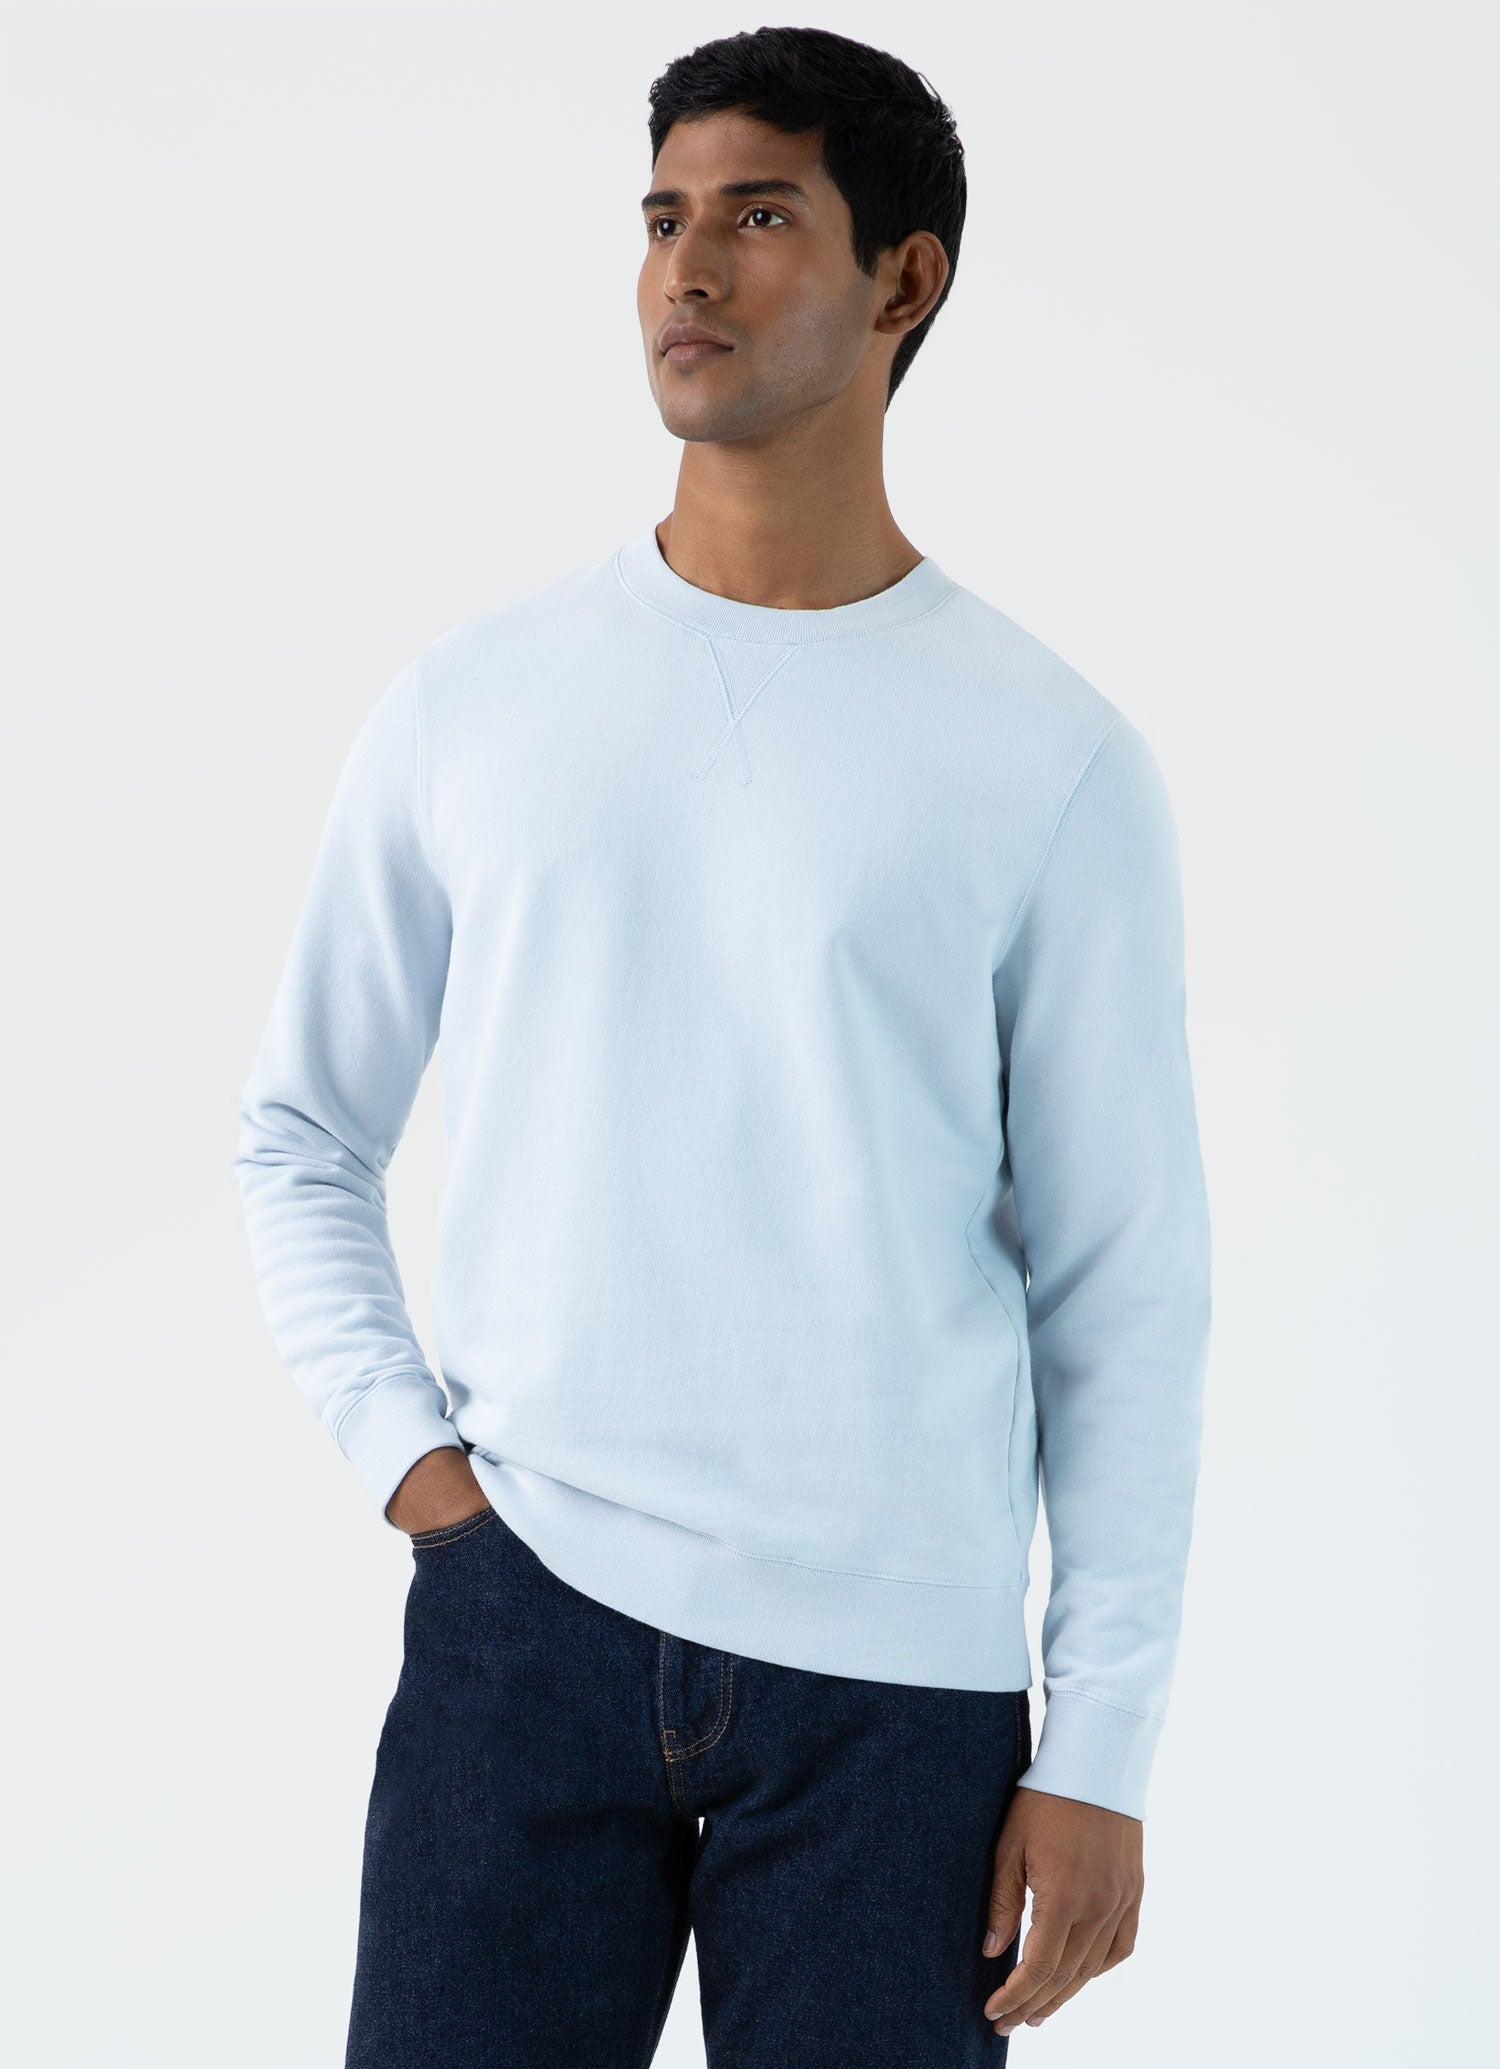 Men\'s Undyed Loopback Sweatshirt in | Sunspel Undyed